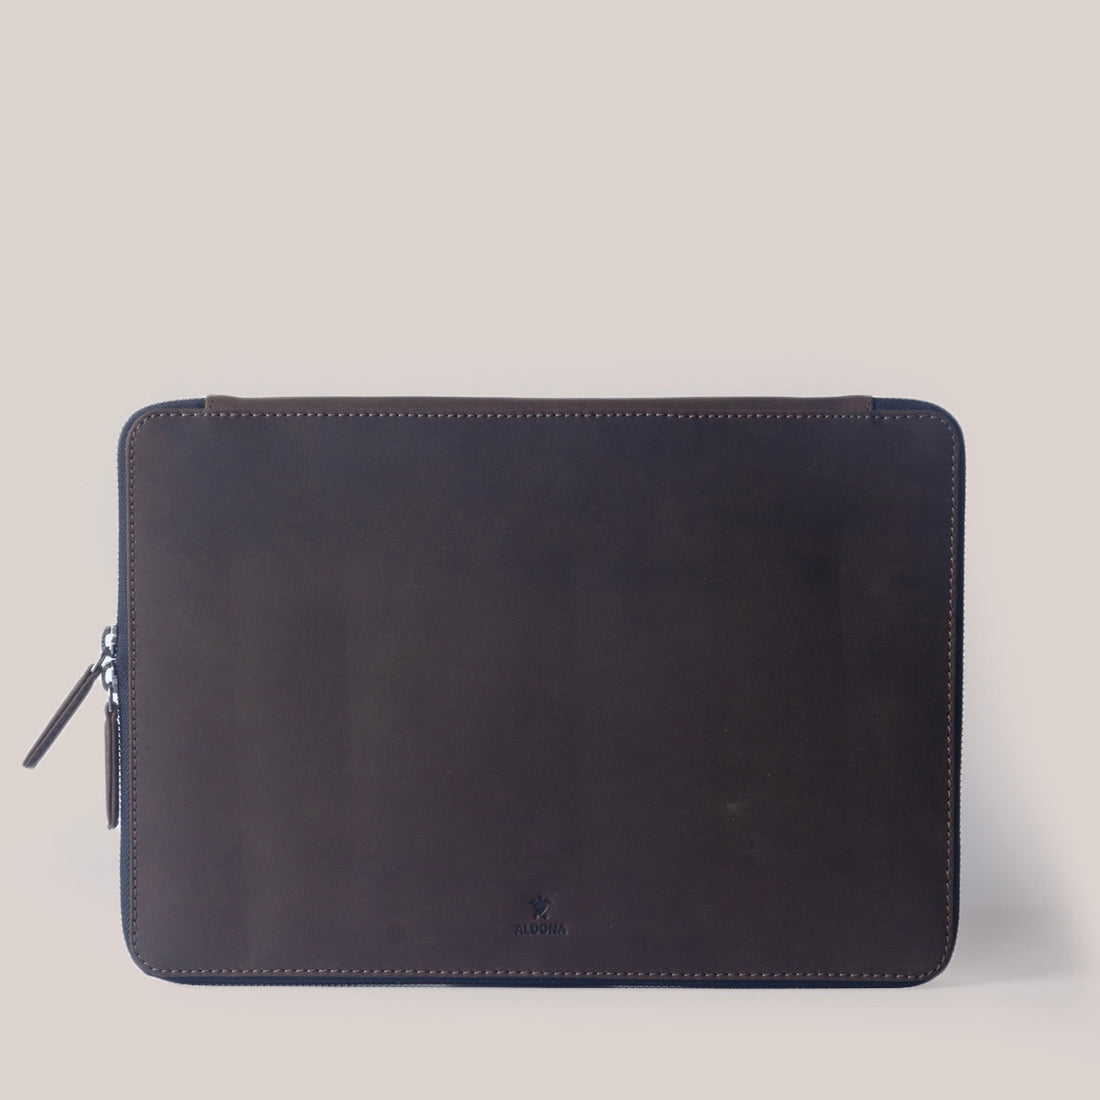 DELL XPS 15 Zippered Laptop Case - Felt and Tan Crunch